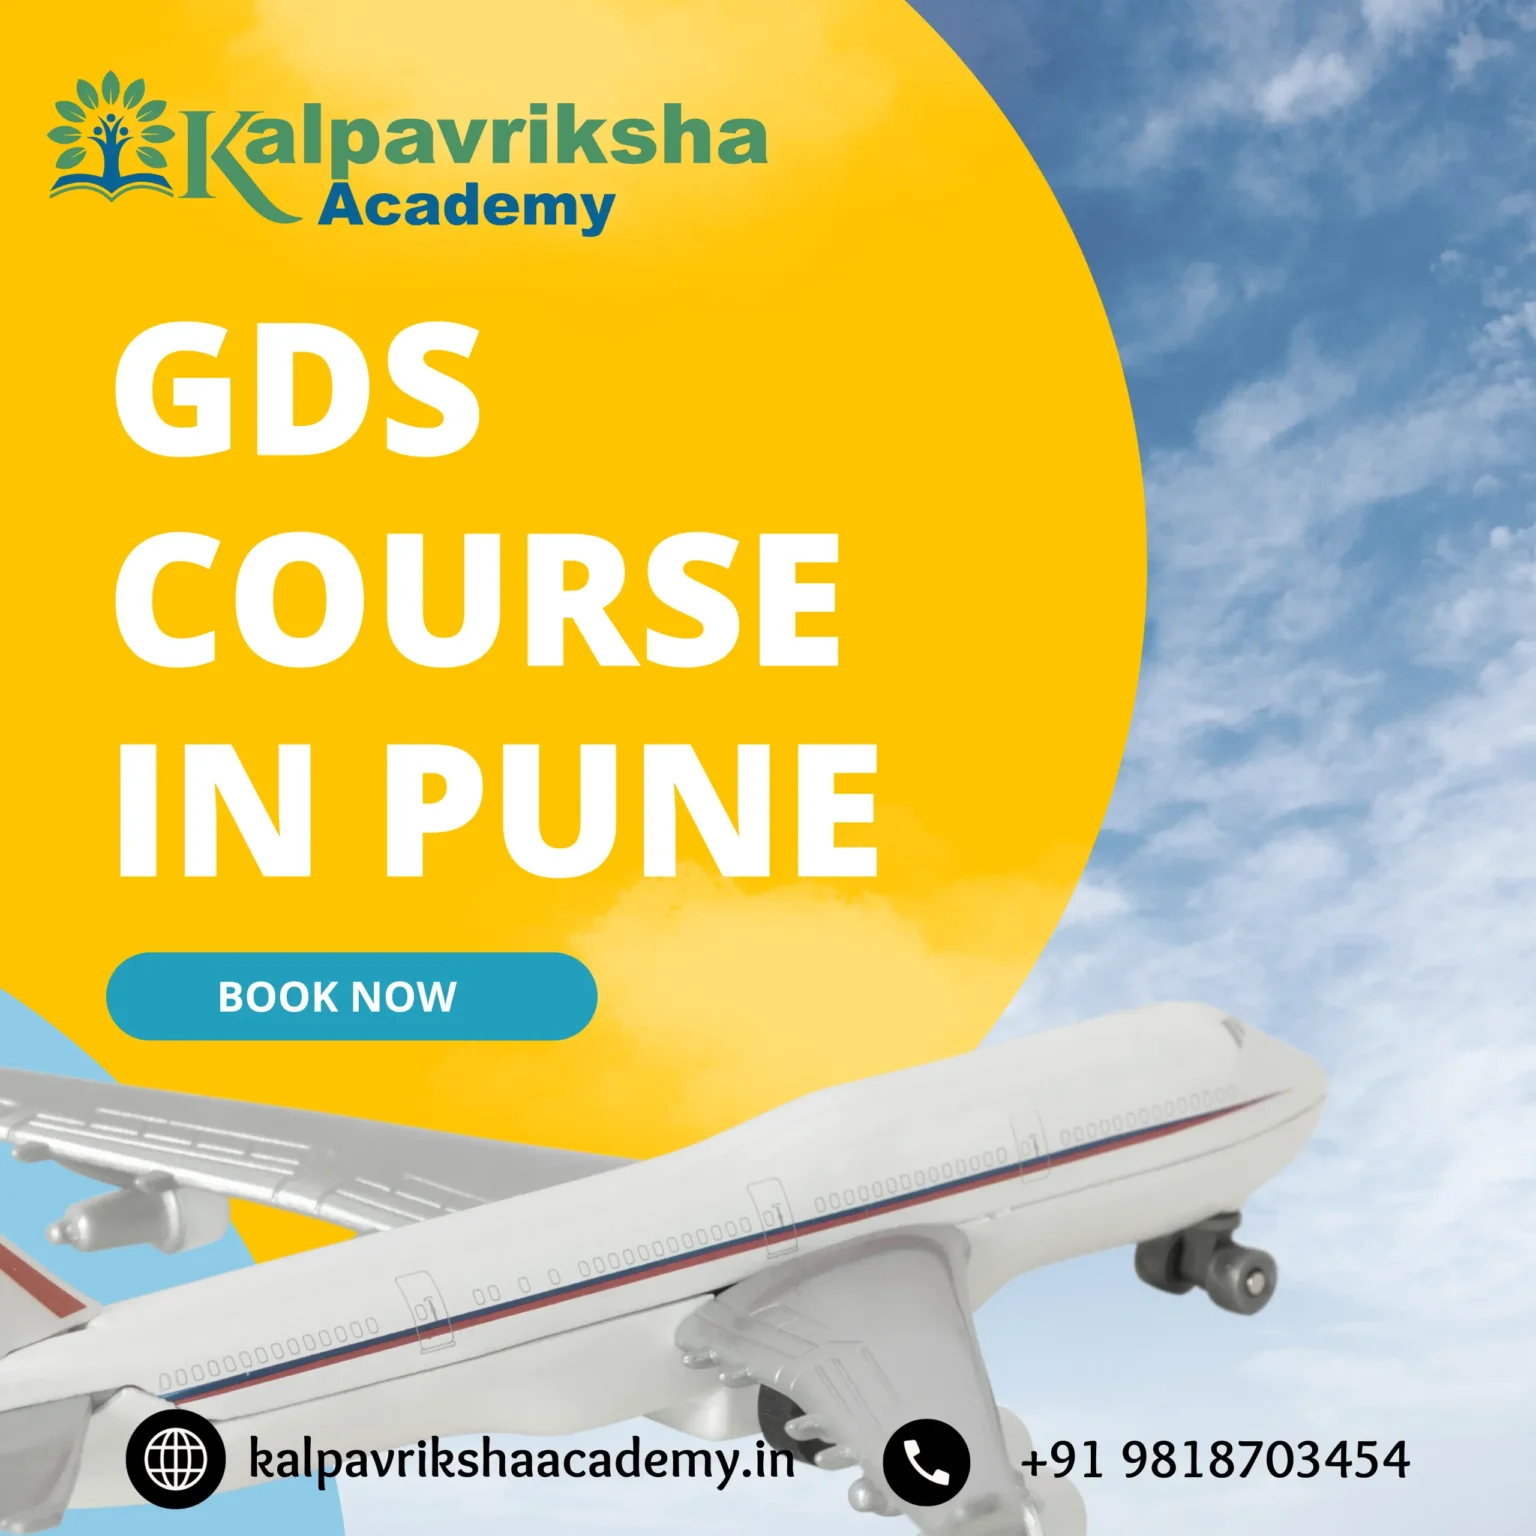 GDS Course In Pune - Kalpavriksha Academy